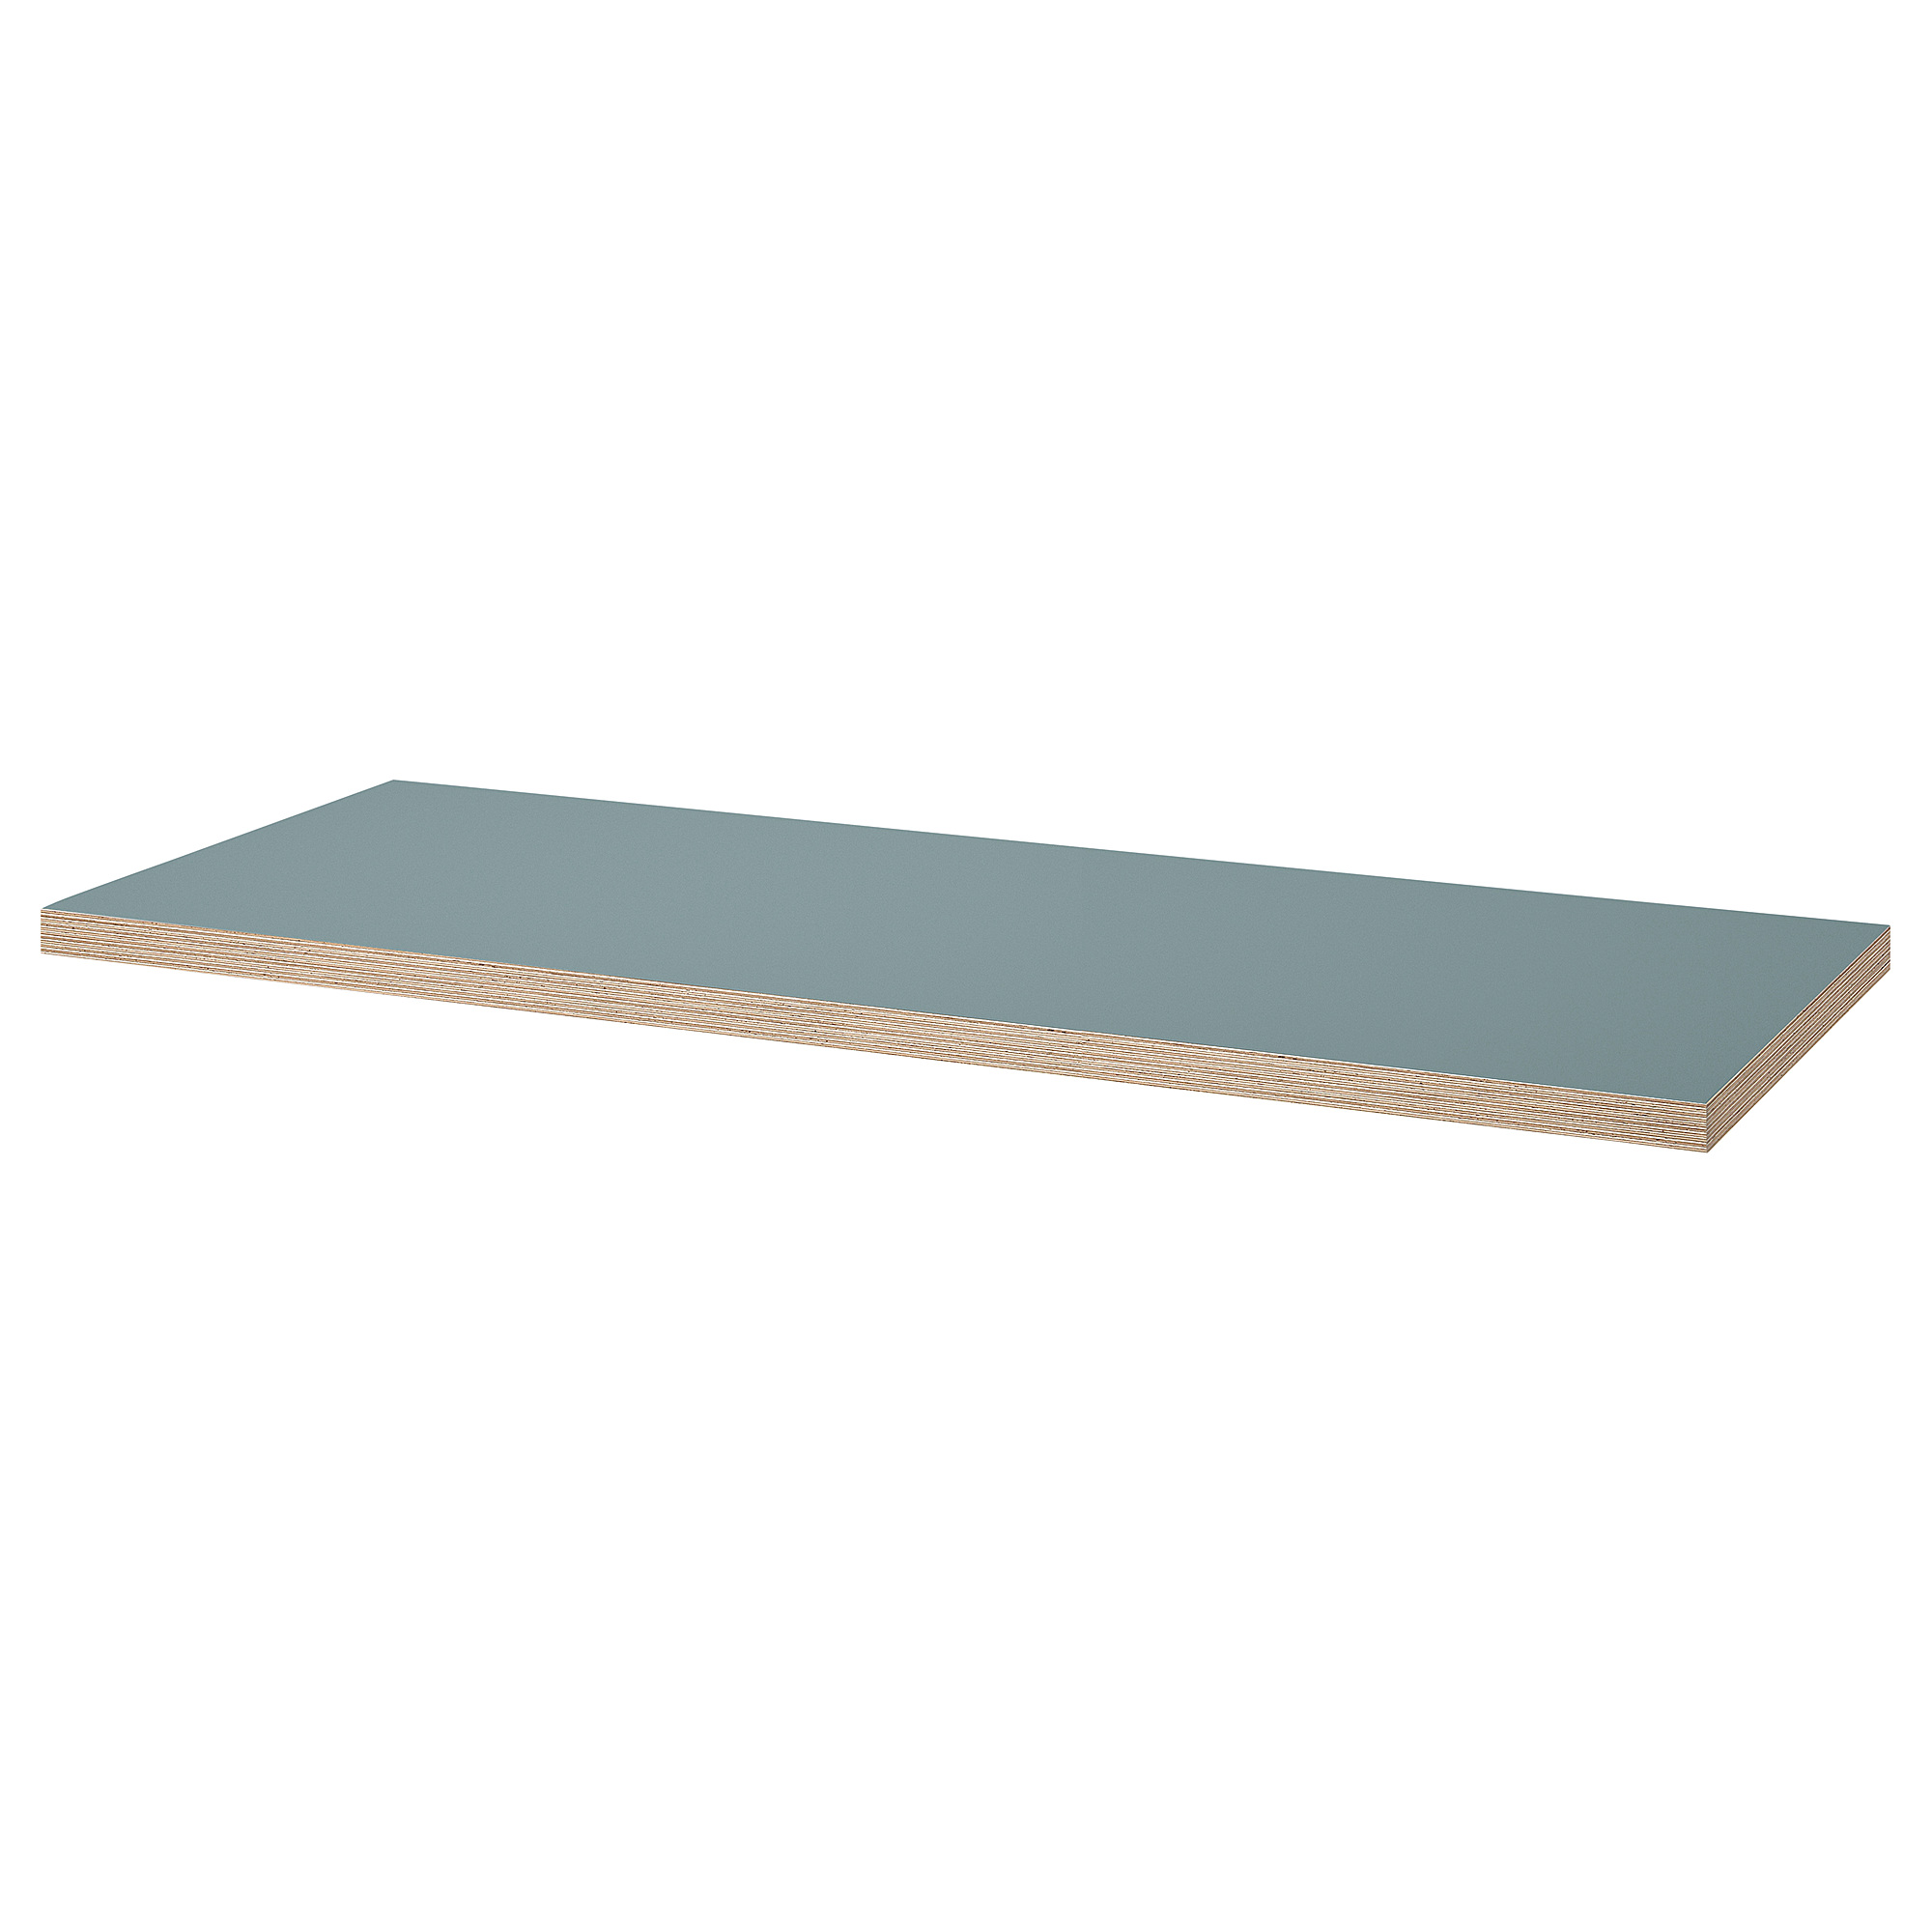 LAGKAPTEN - 檯面板, 灰湖水綠色, 140x60 厘米| IKEA 香港及澳門